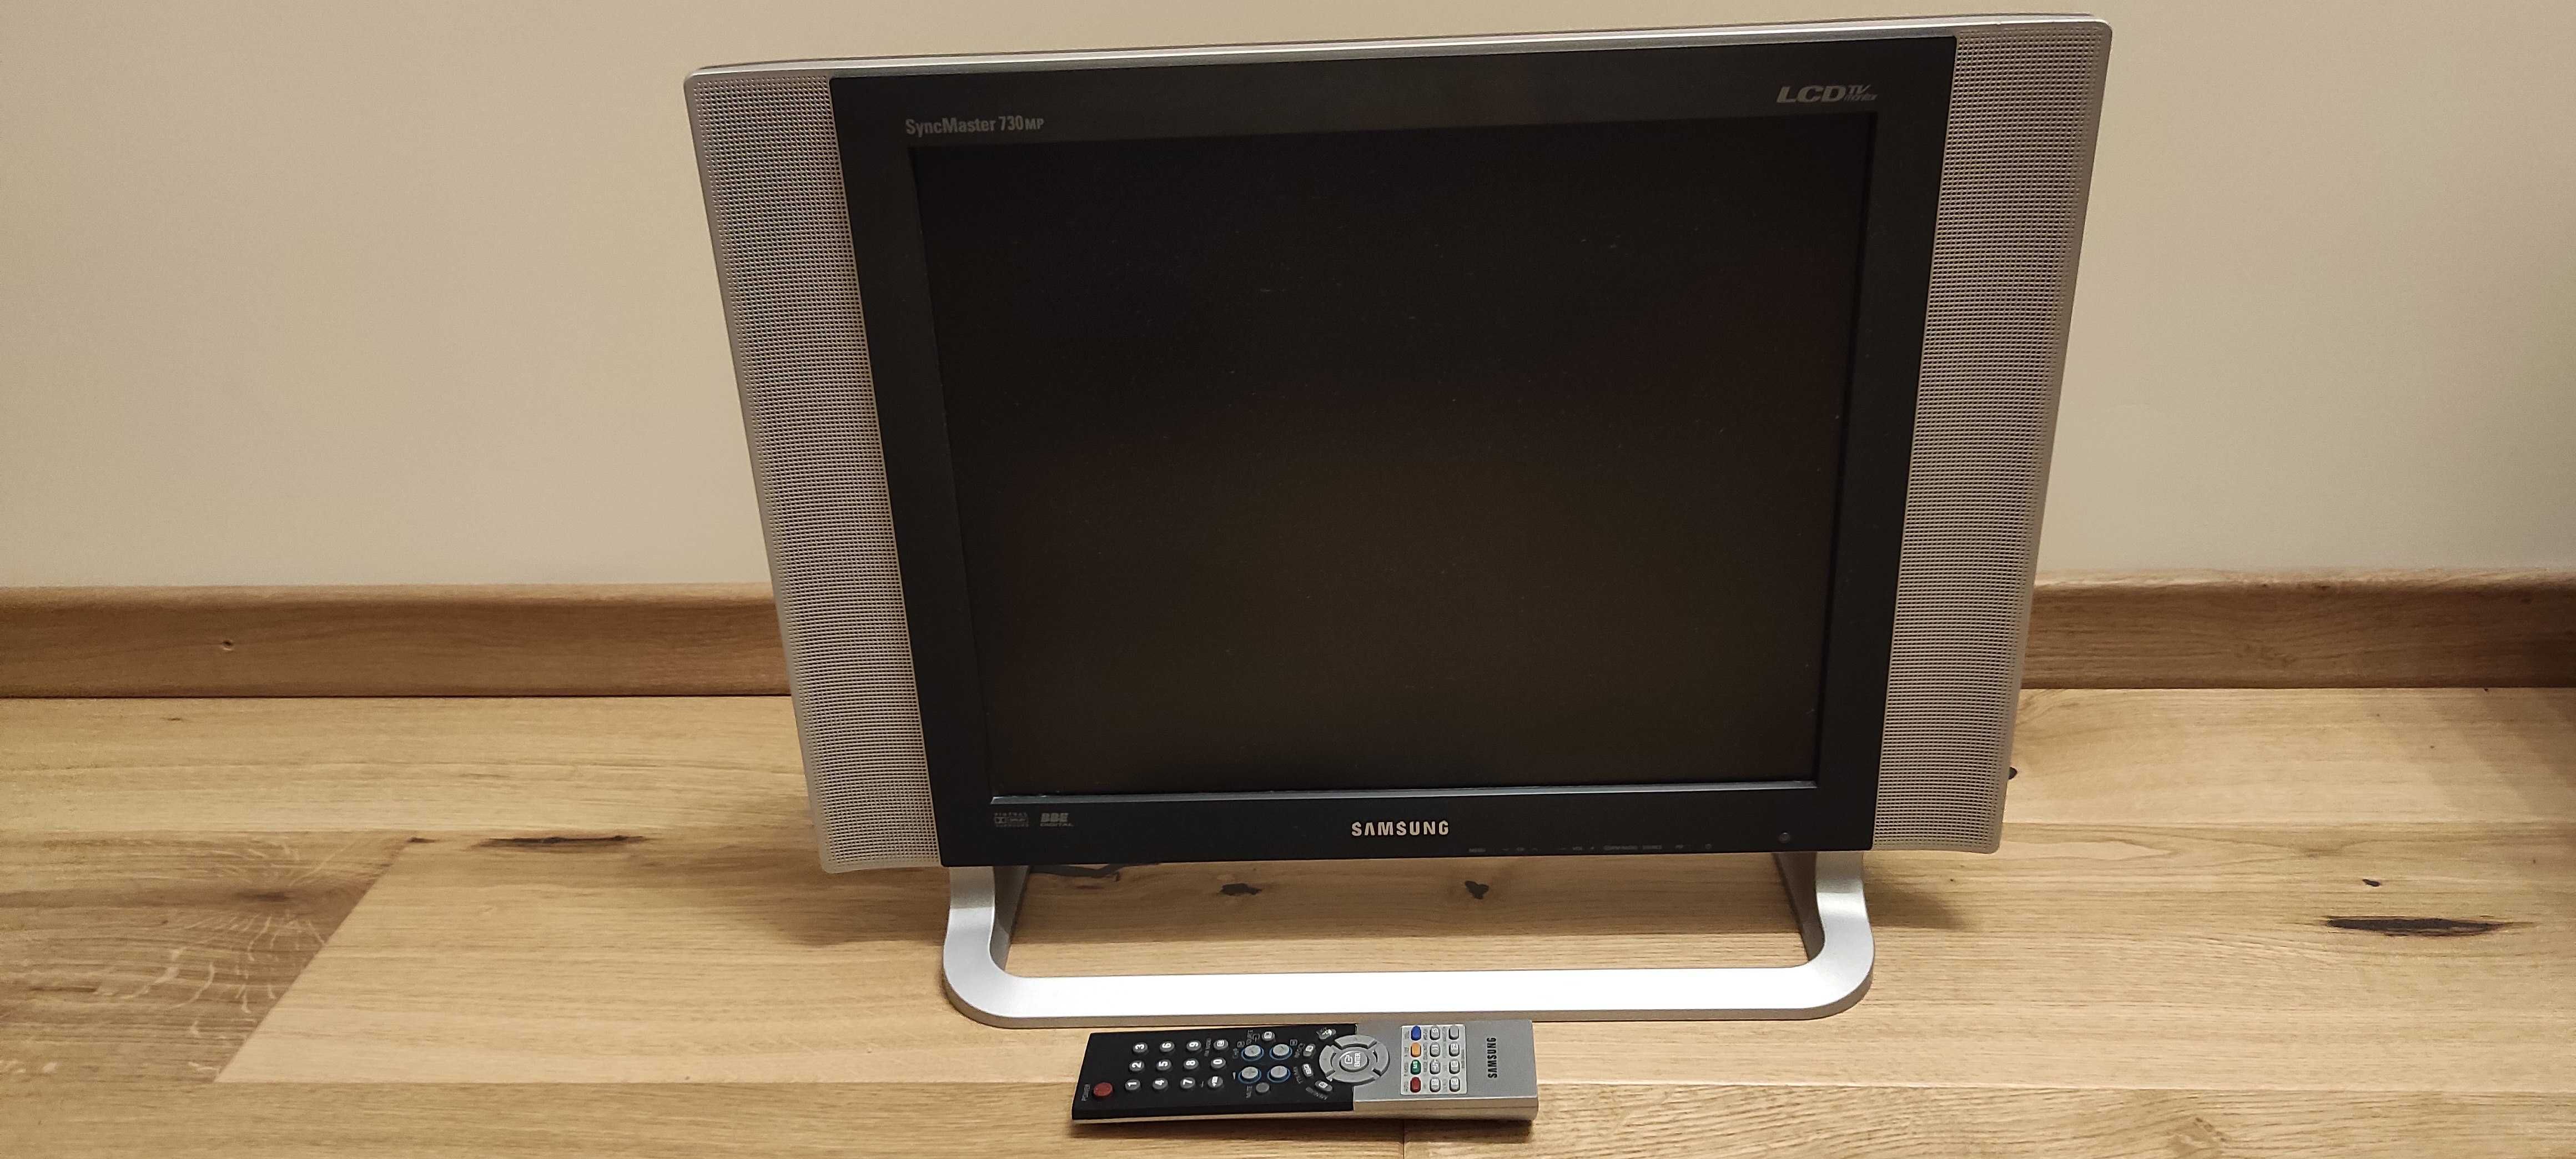 Monitor z tunerem TV SAMSUNG 730MP